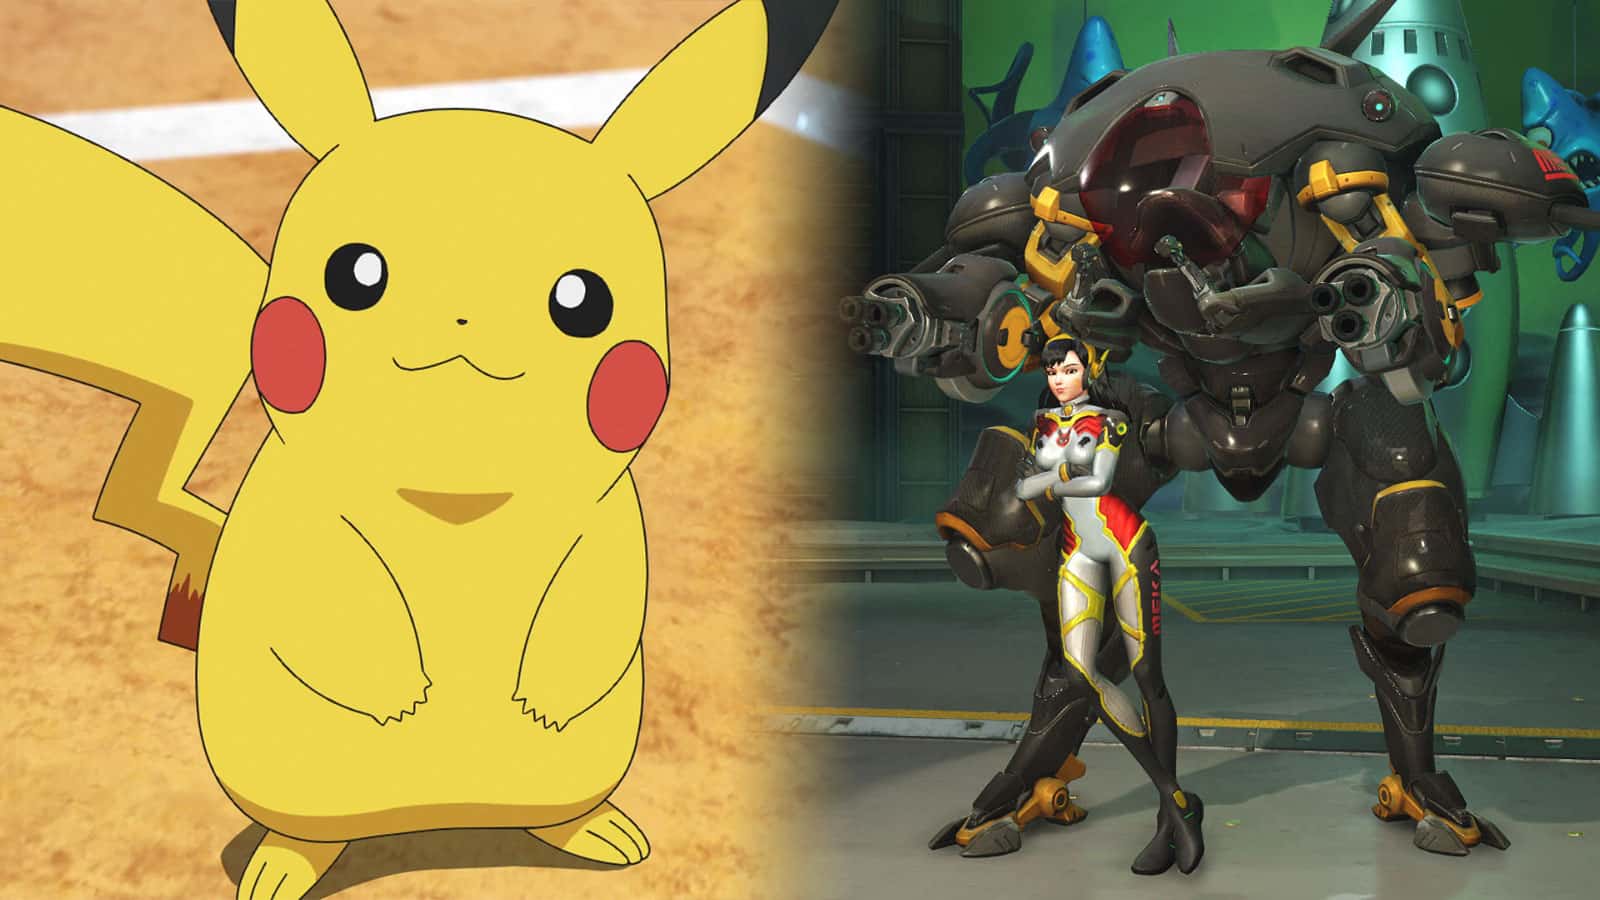 Dva and Pikachu header image